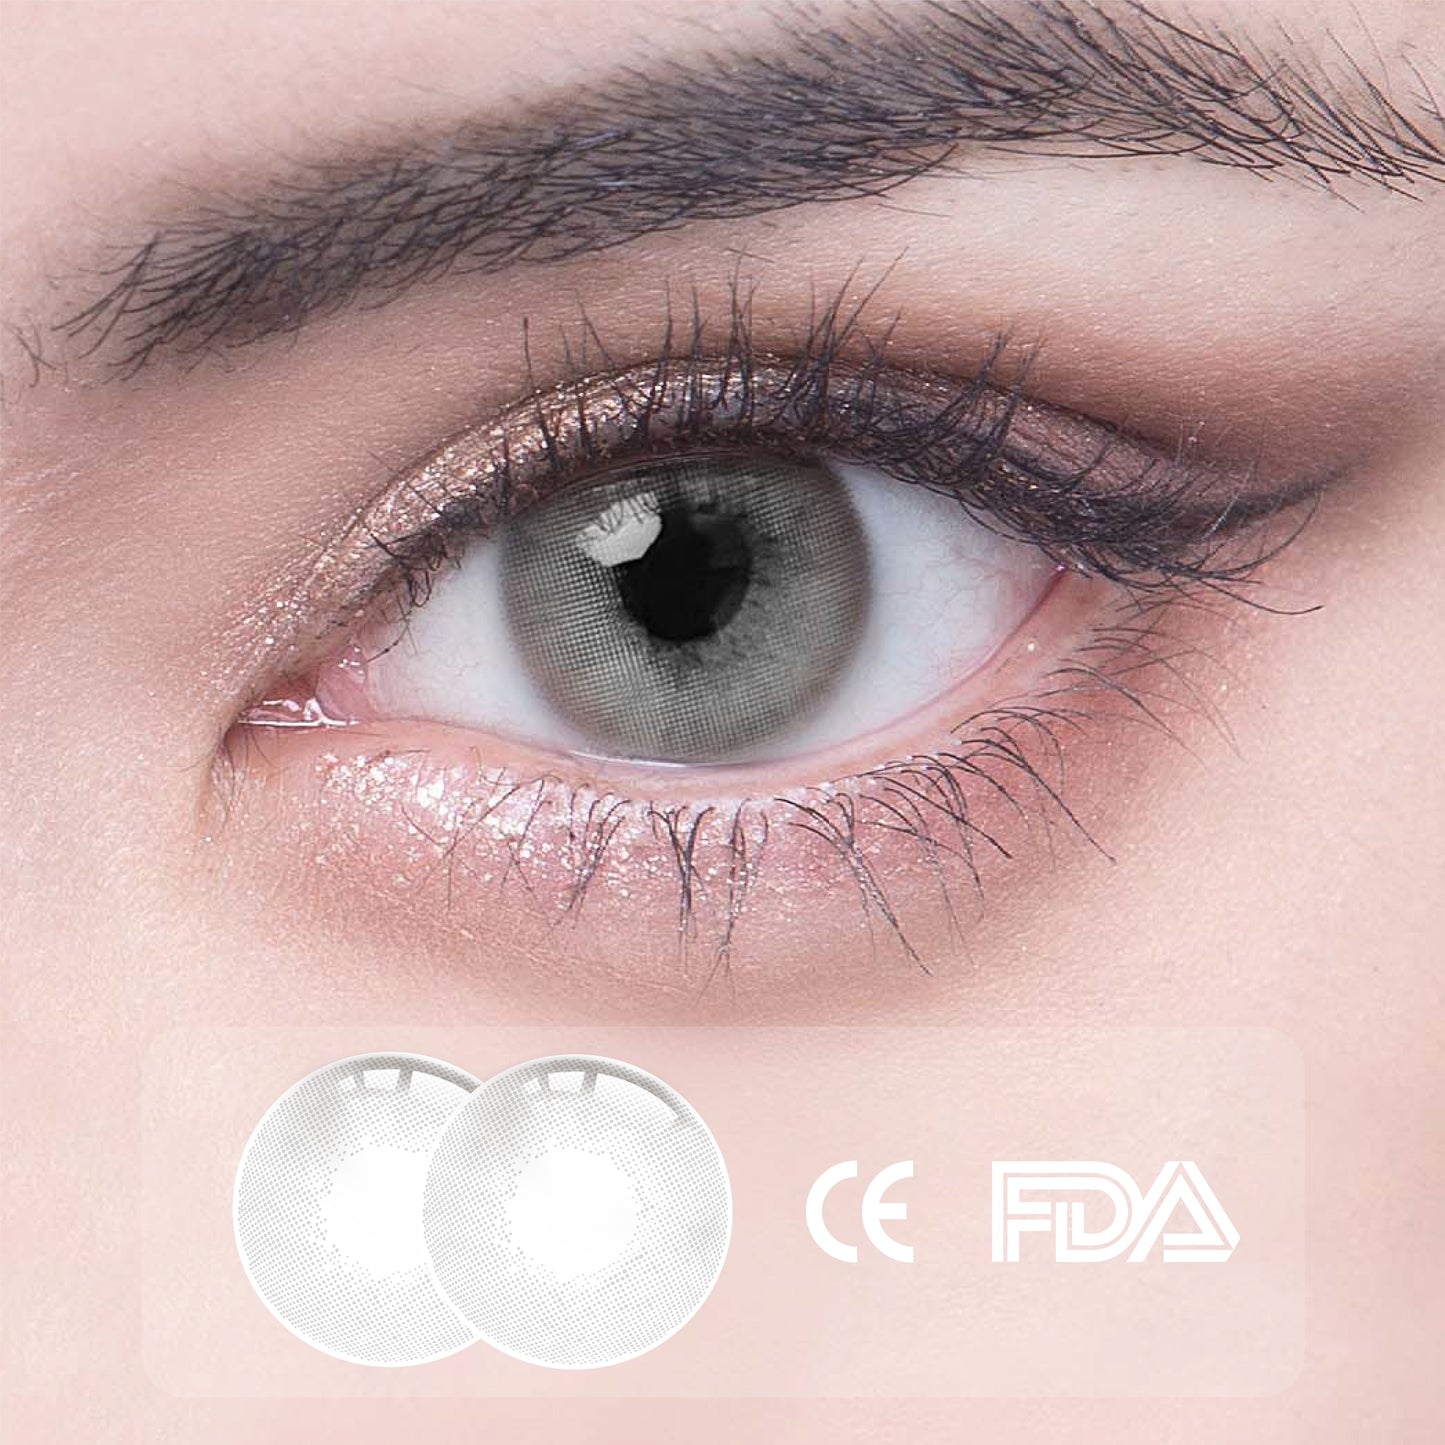 1Pcs FDA Certificate Eyes Colorful Contact Lenses - Bohemian light grey